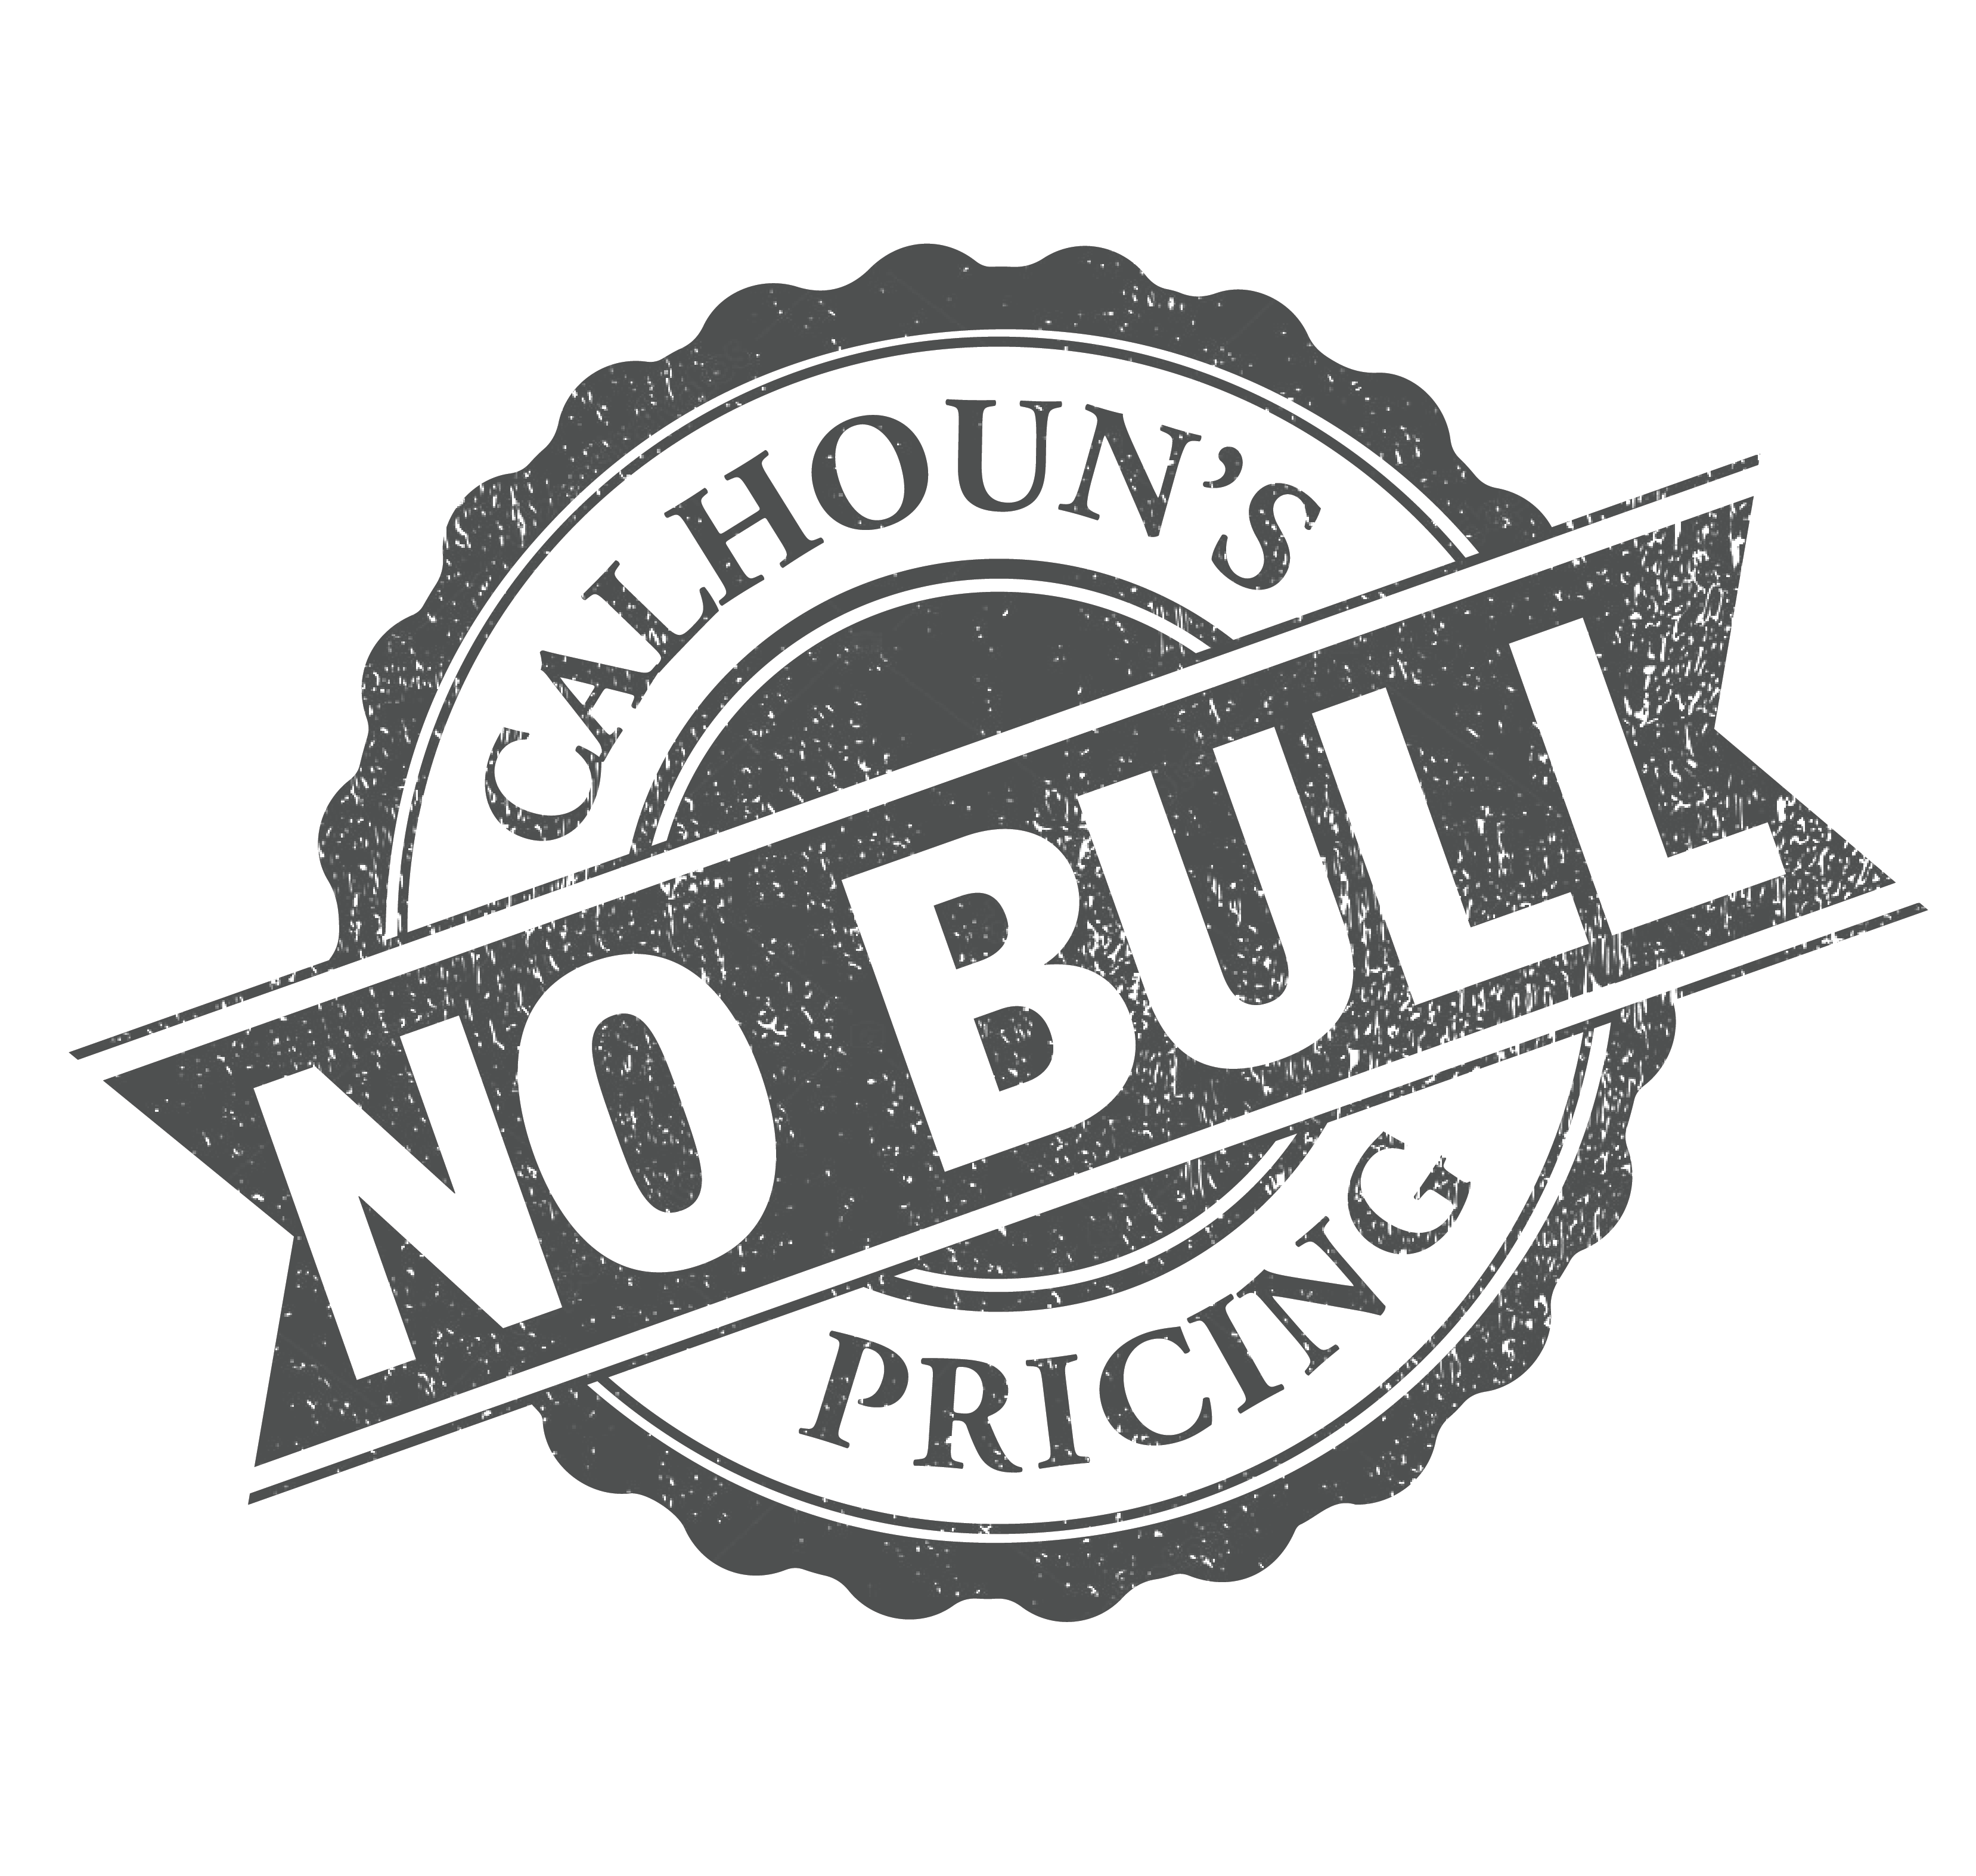 Calhoun's No Bull Pricing